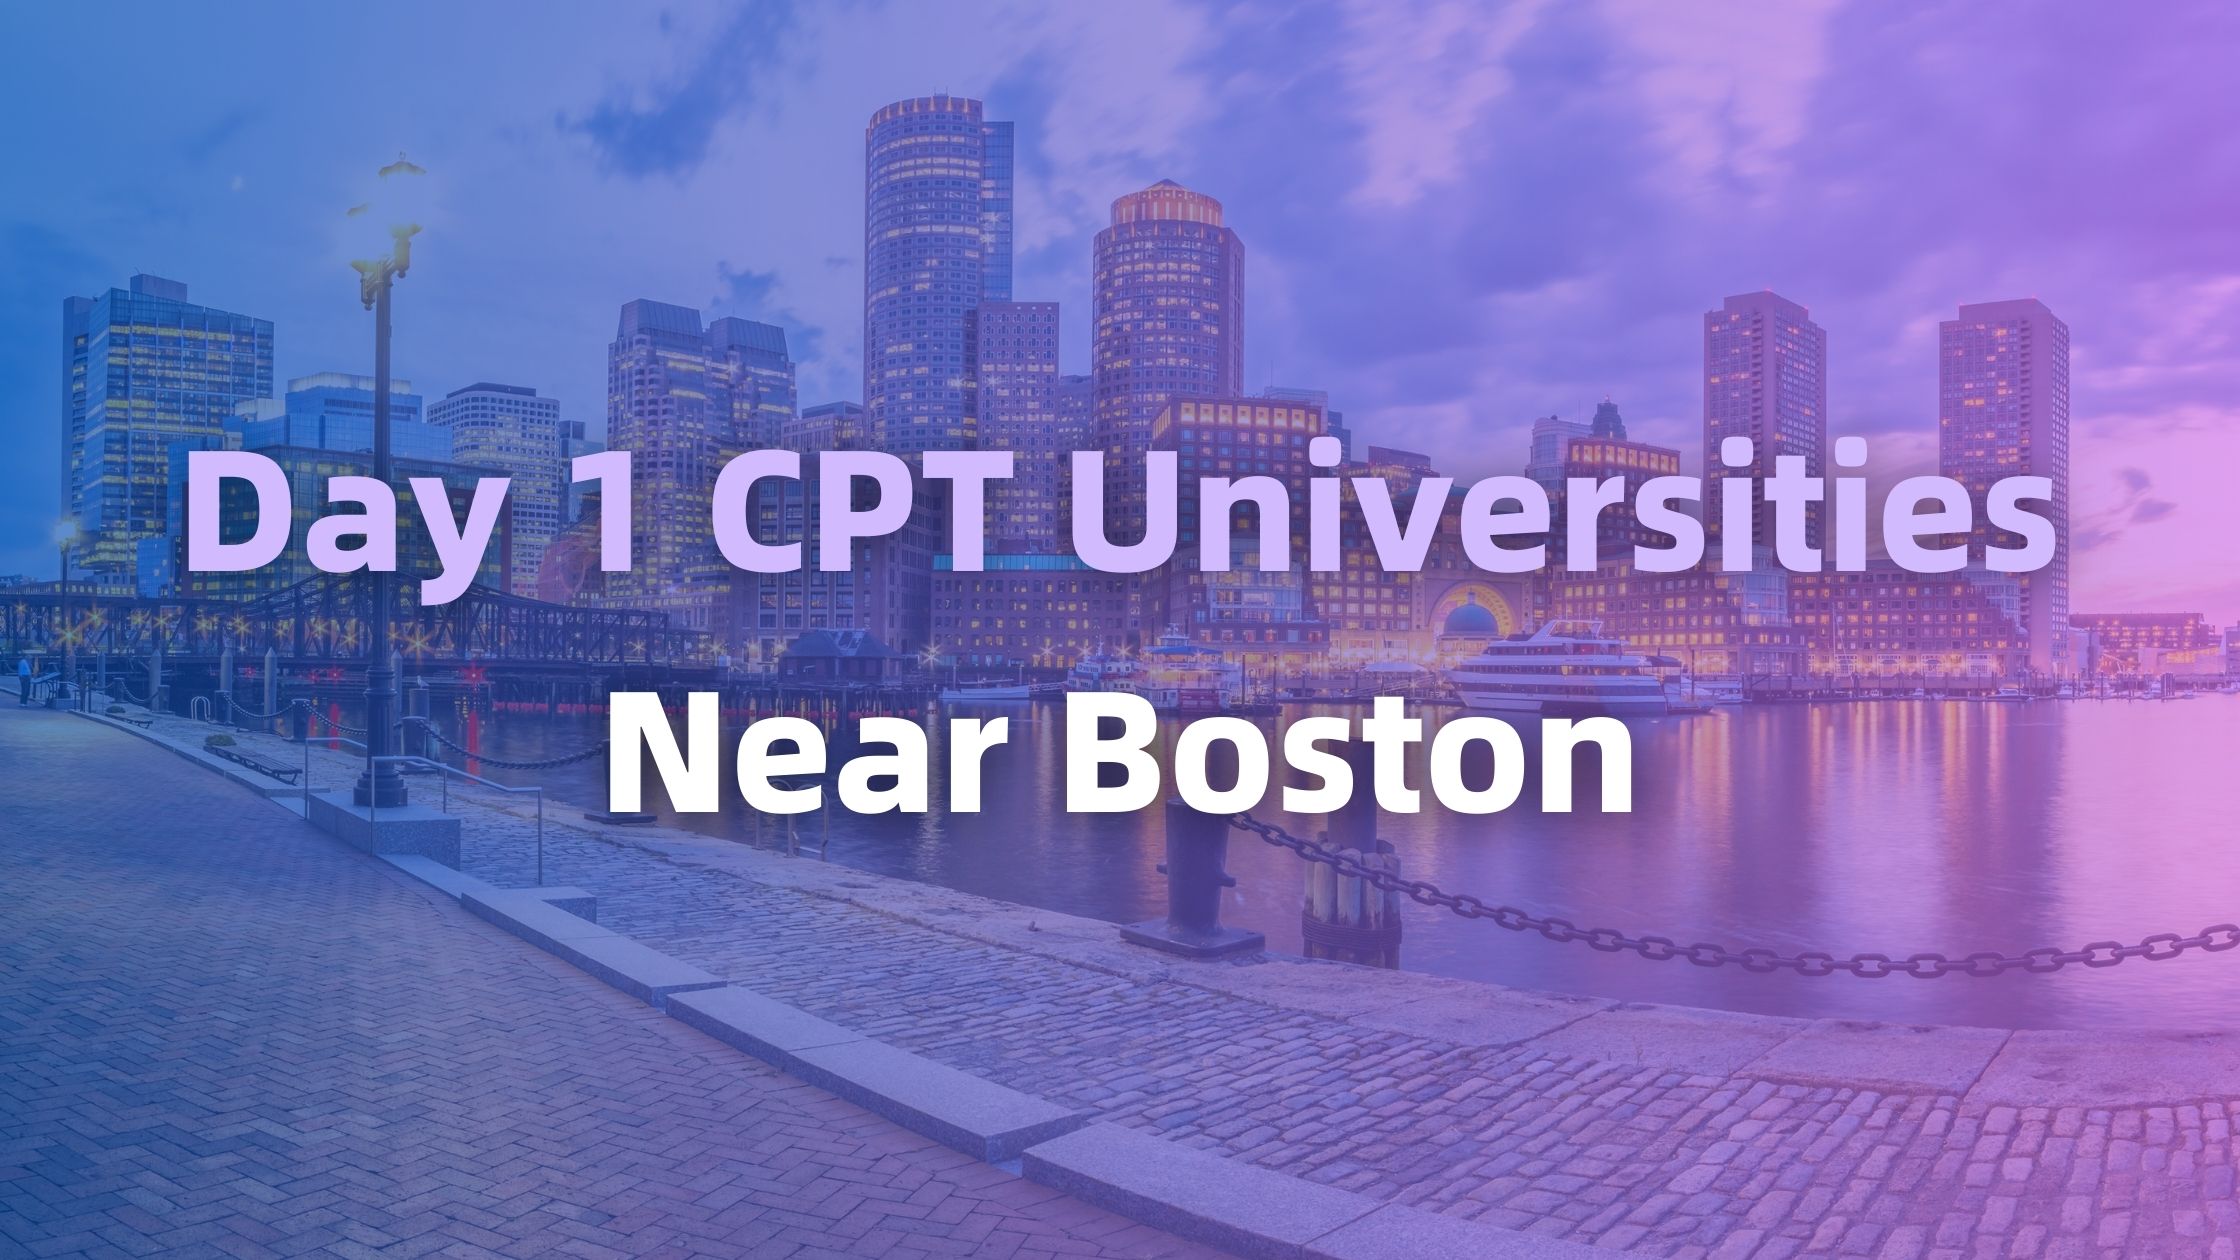 Day 1 CPT Universities in Boston